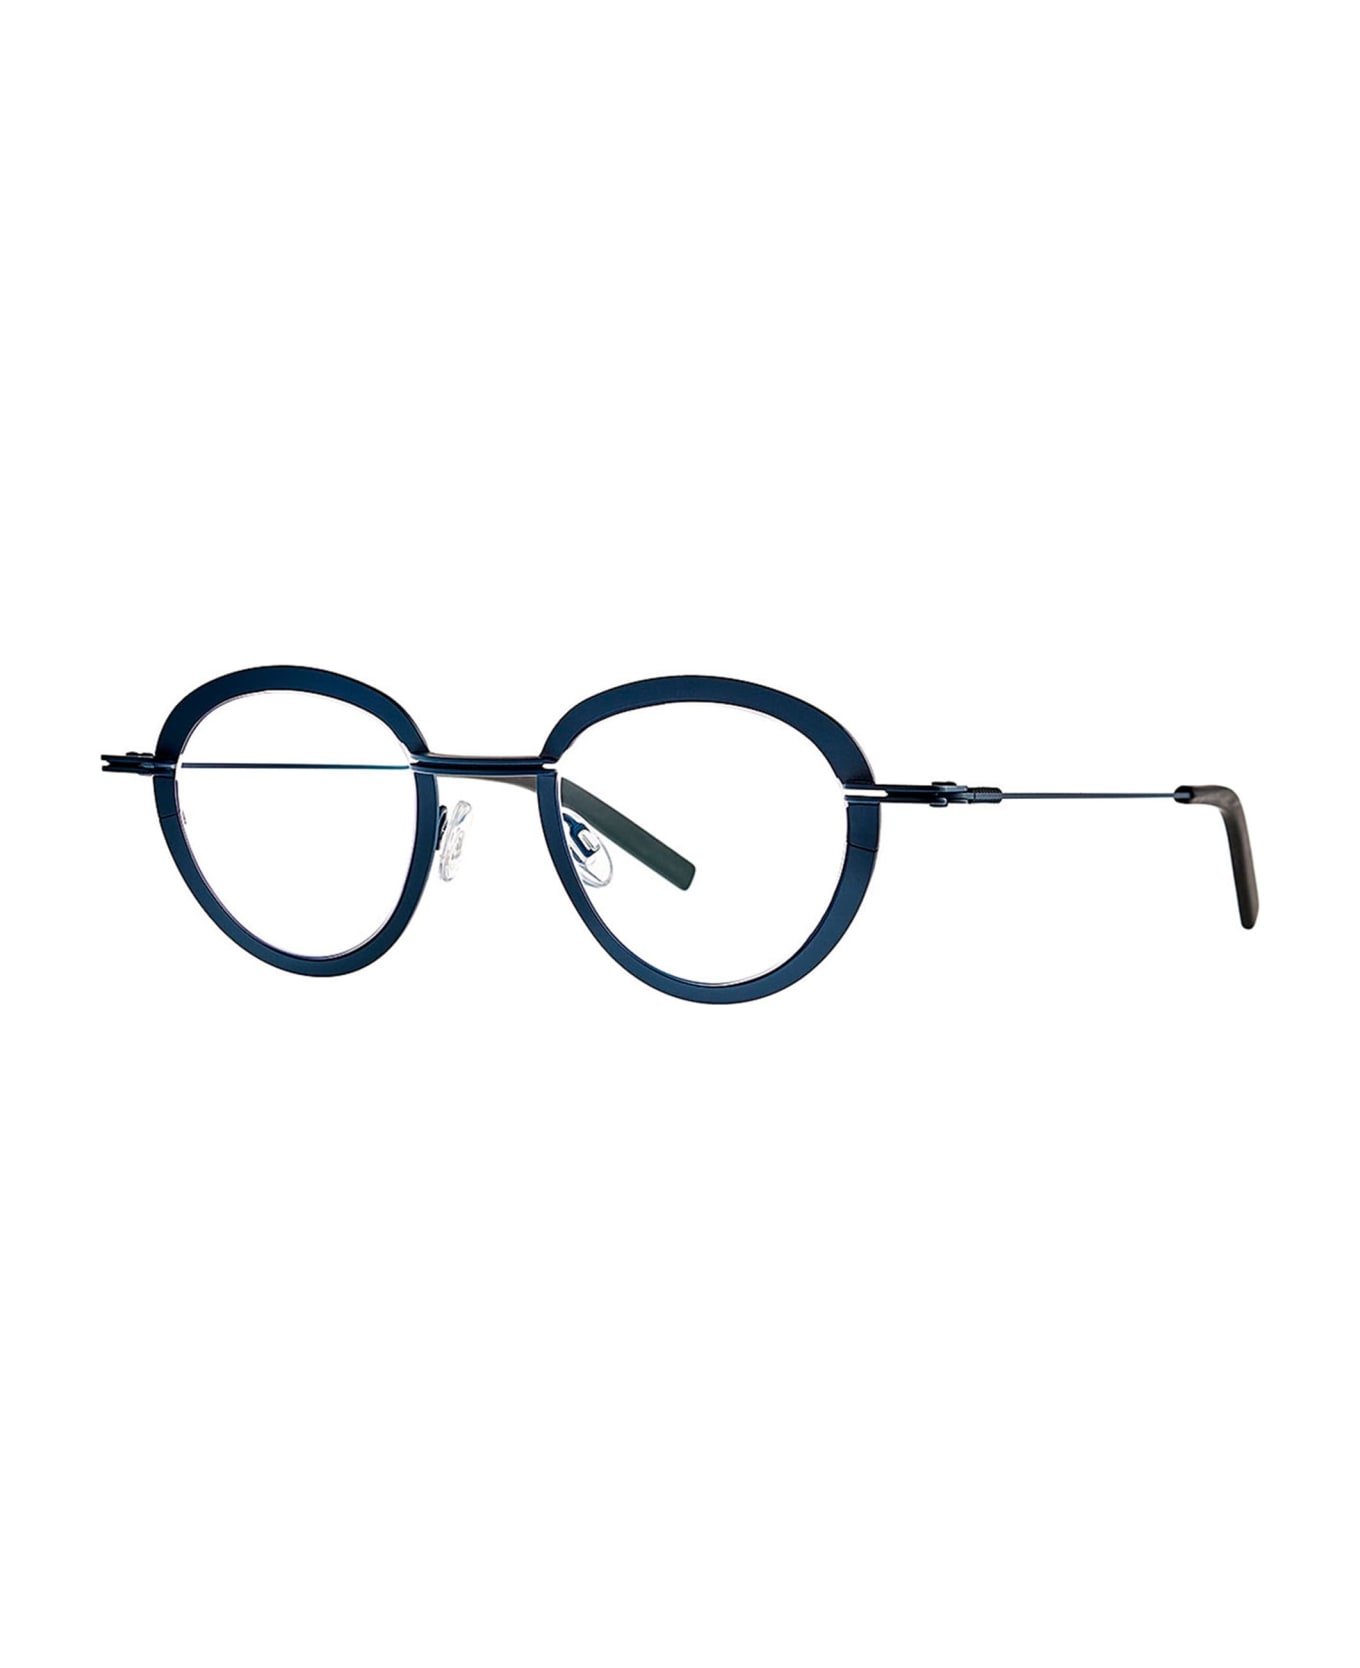 Theo Eyewear Sensational - 353 Rx Glasses - dark blue アイウェア